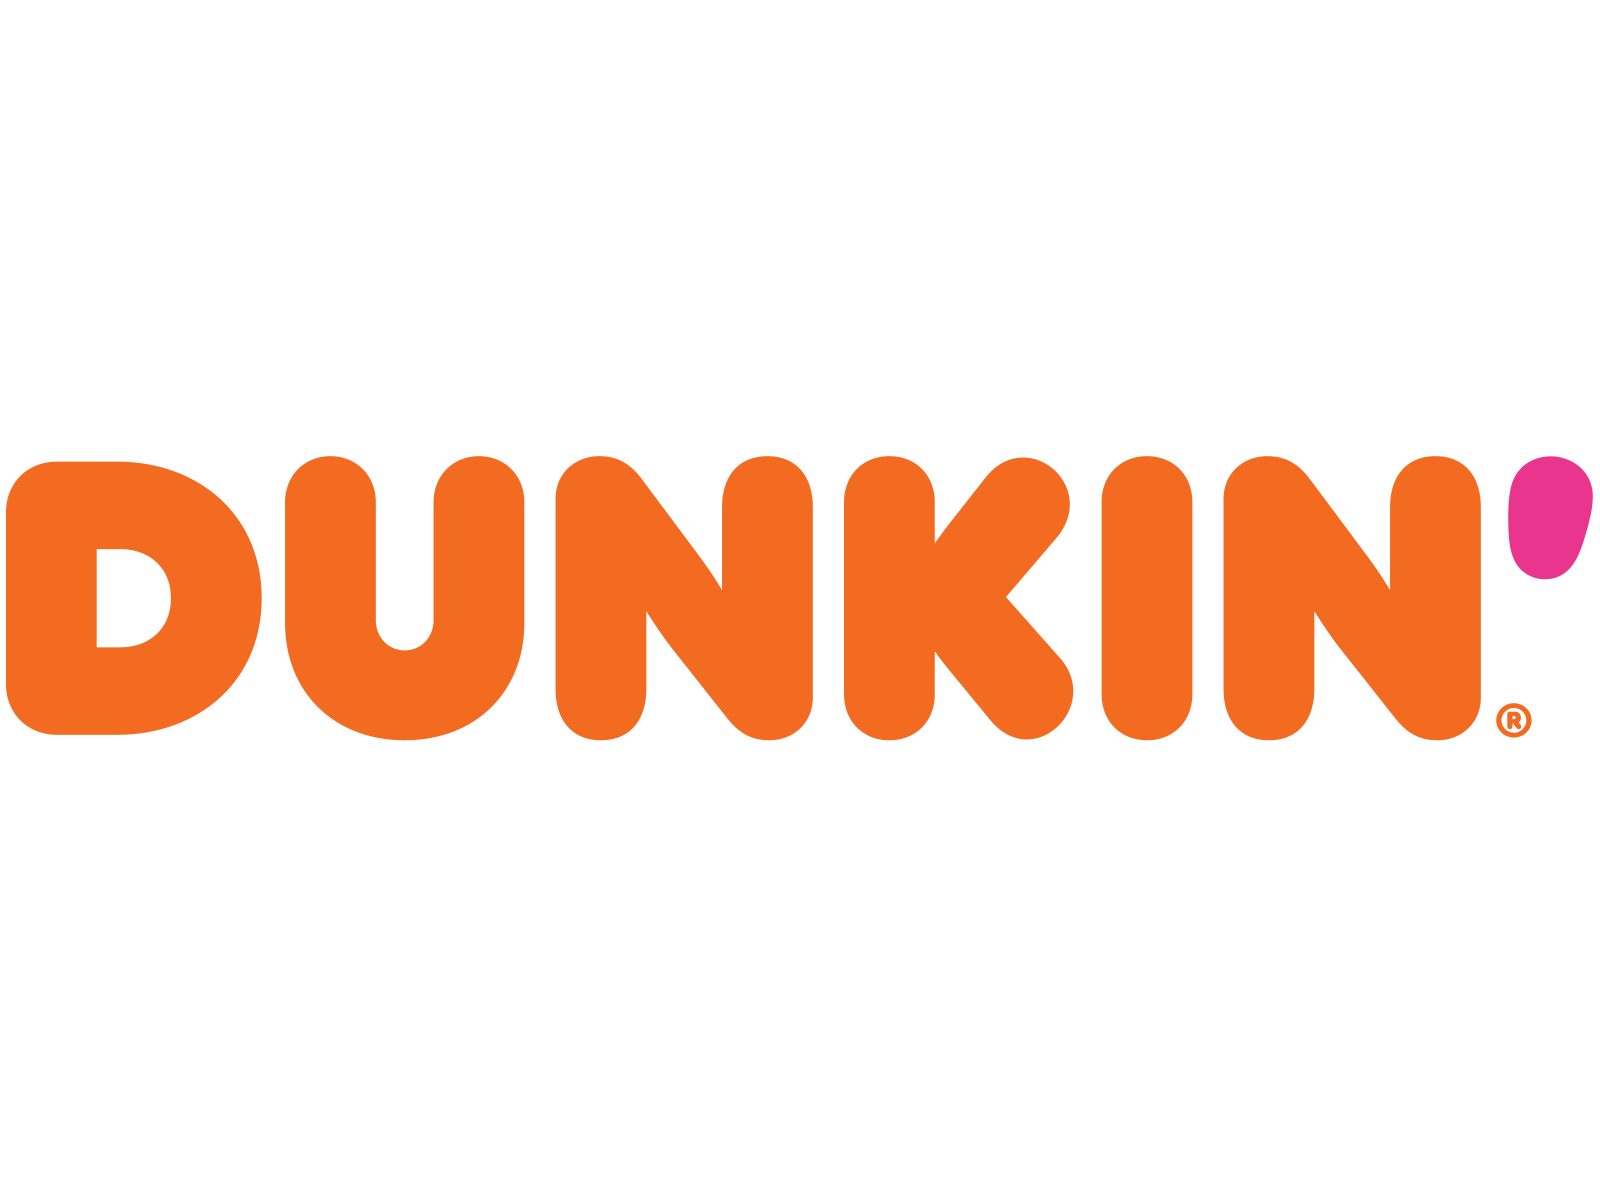 Brand: Dunkin